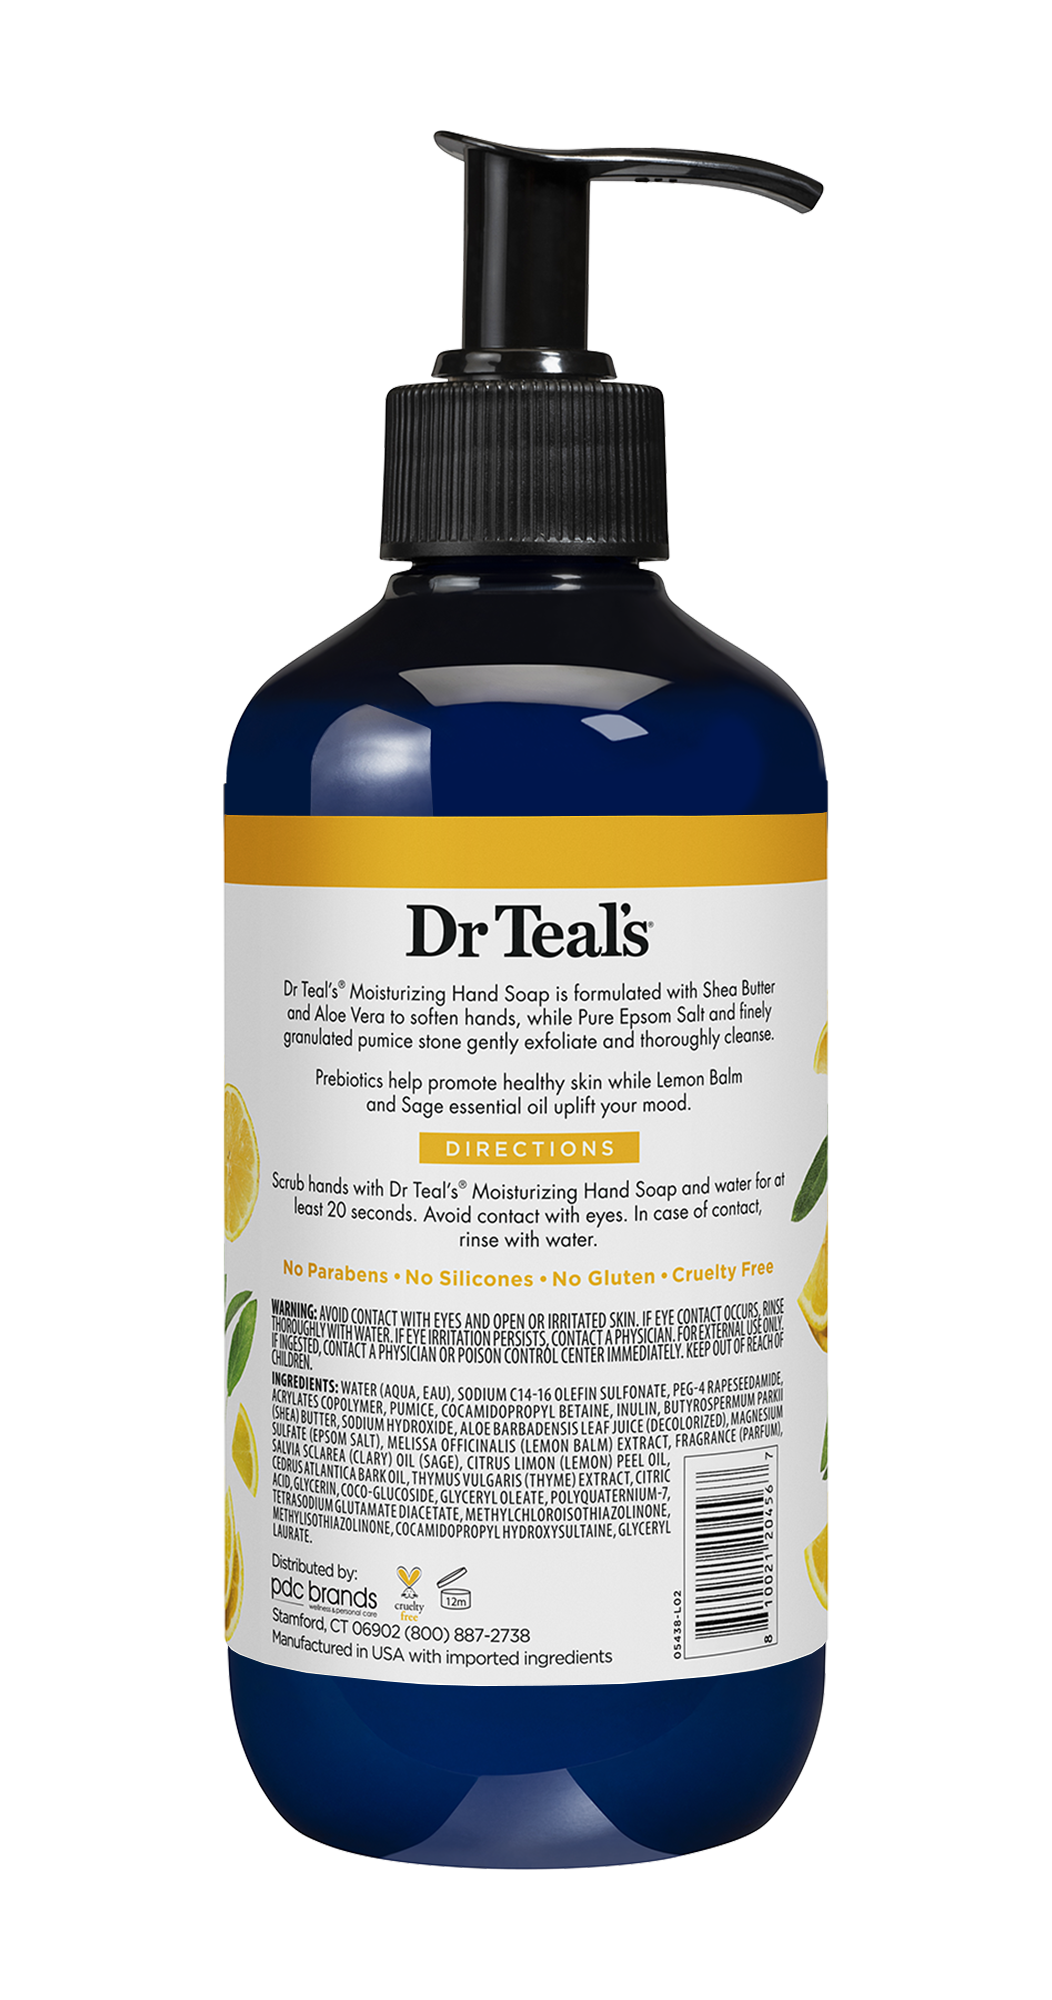 Dr Teal's Moisturizing Hand Soap, Prebiotic with Lemon Balm & Sage Essential Oil, 12.5 fl oz - image 7 of 7